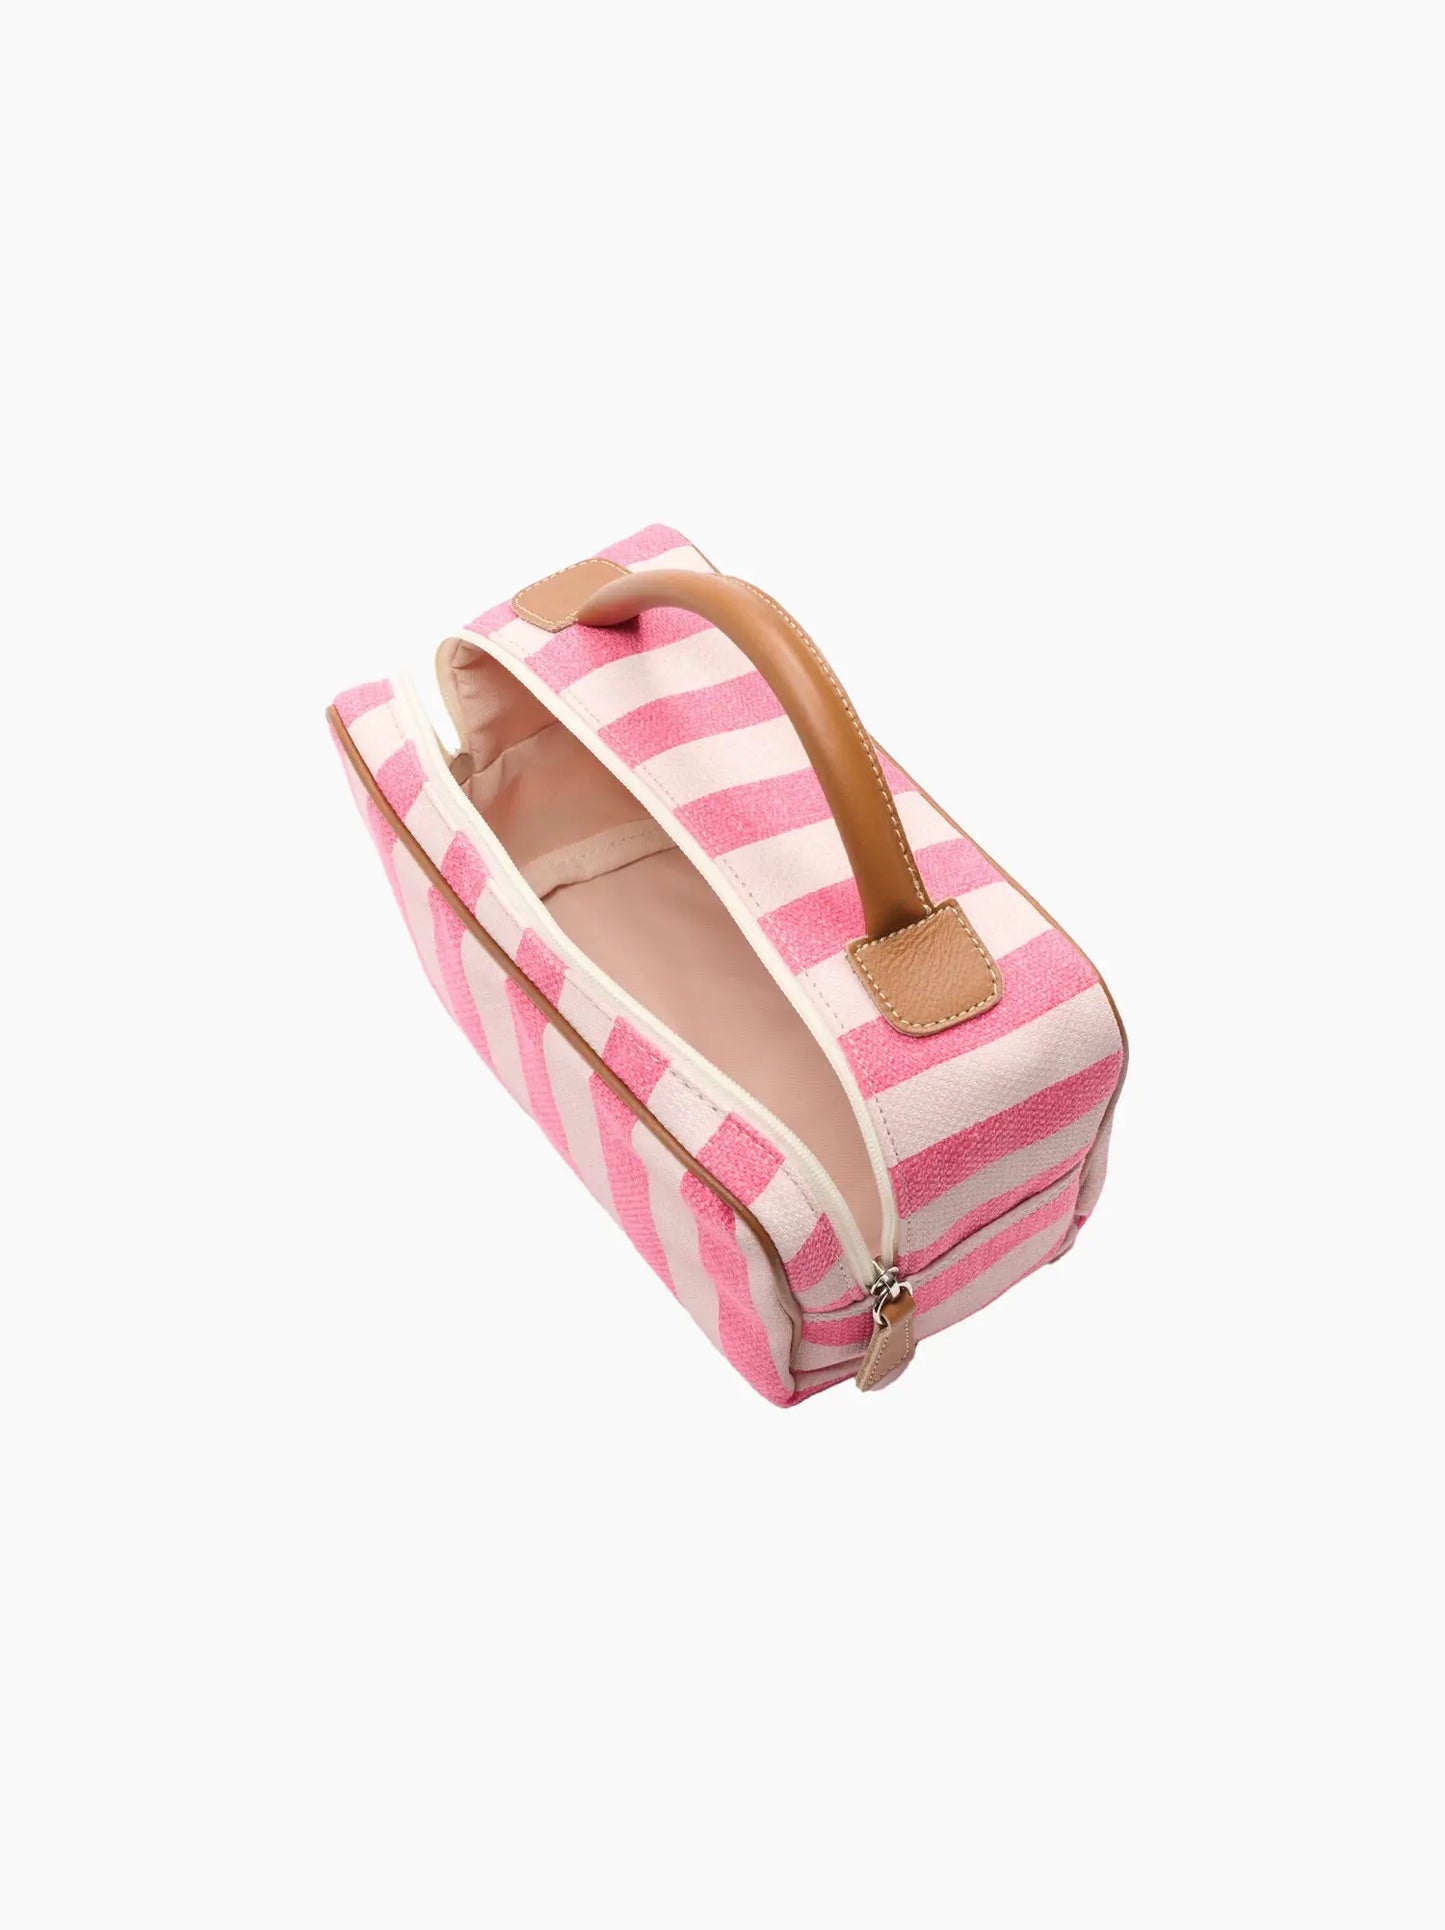 Capri Striped Wash Bag